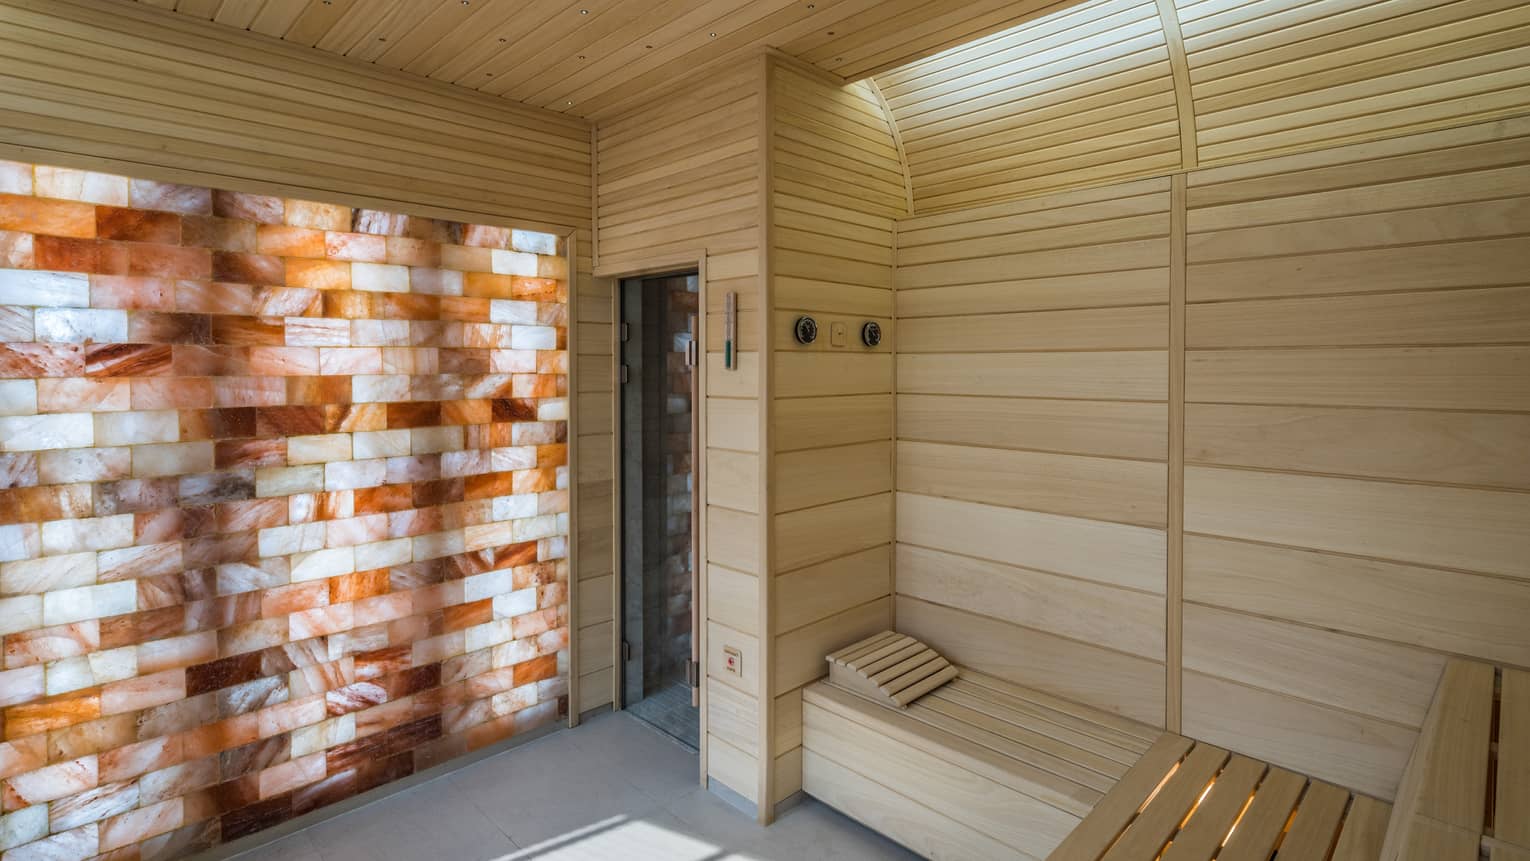 The Club wood sauna room with illuminated wall with wood, brick pattern